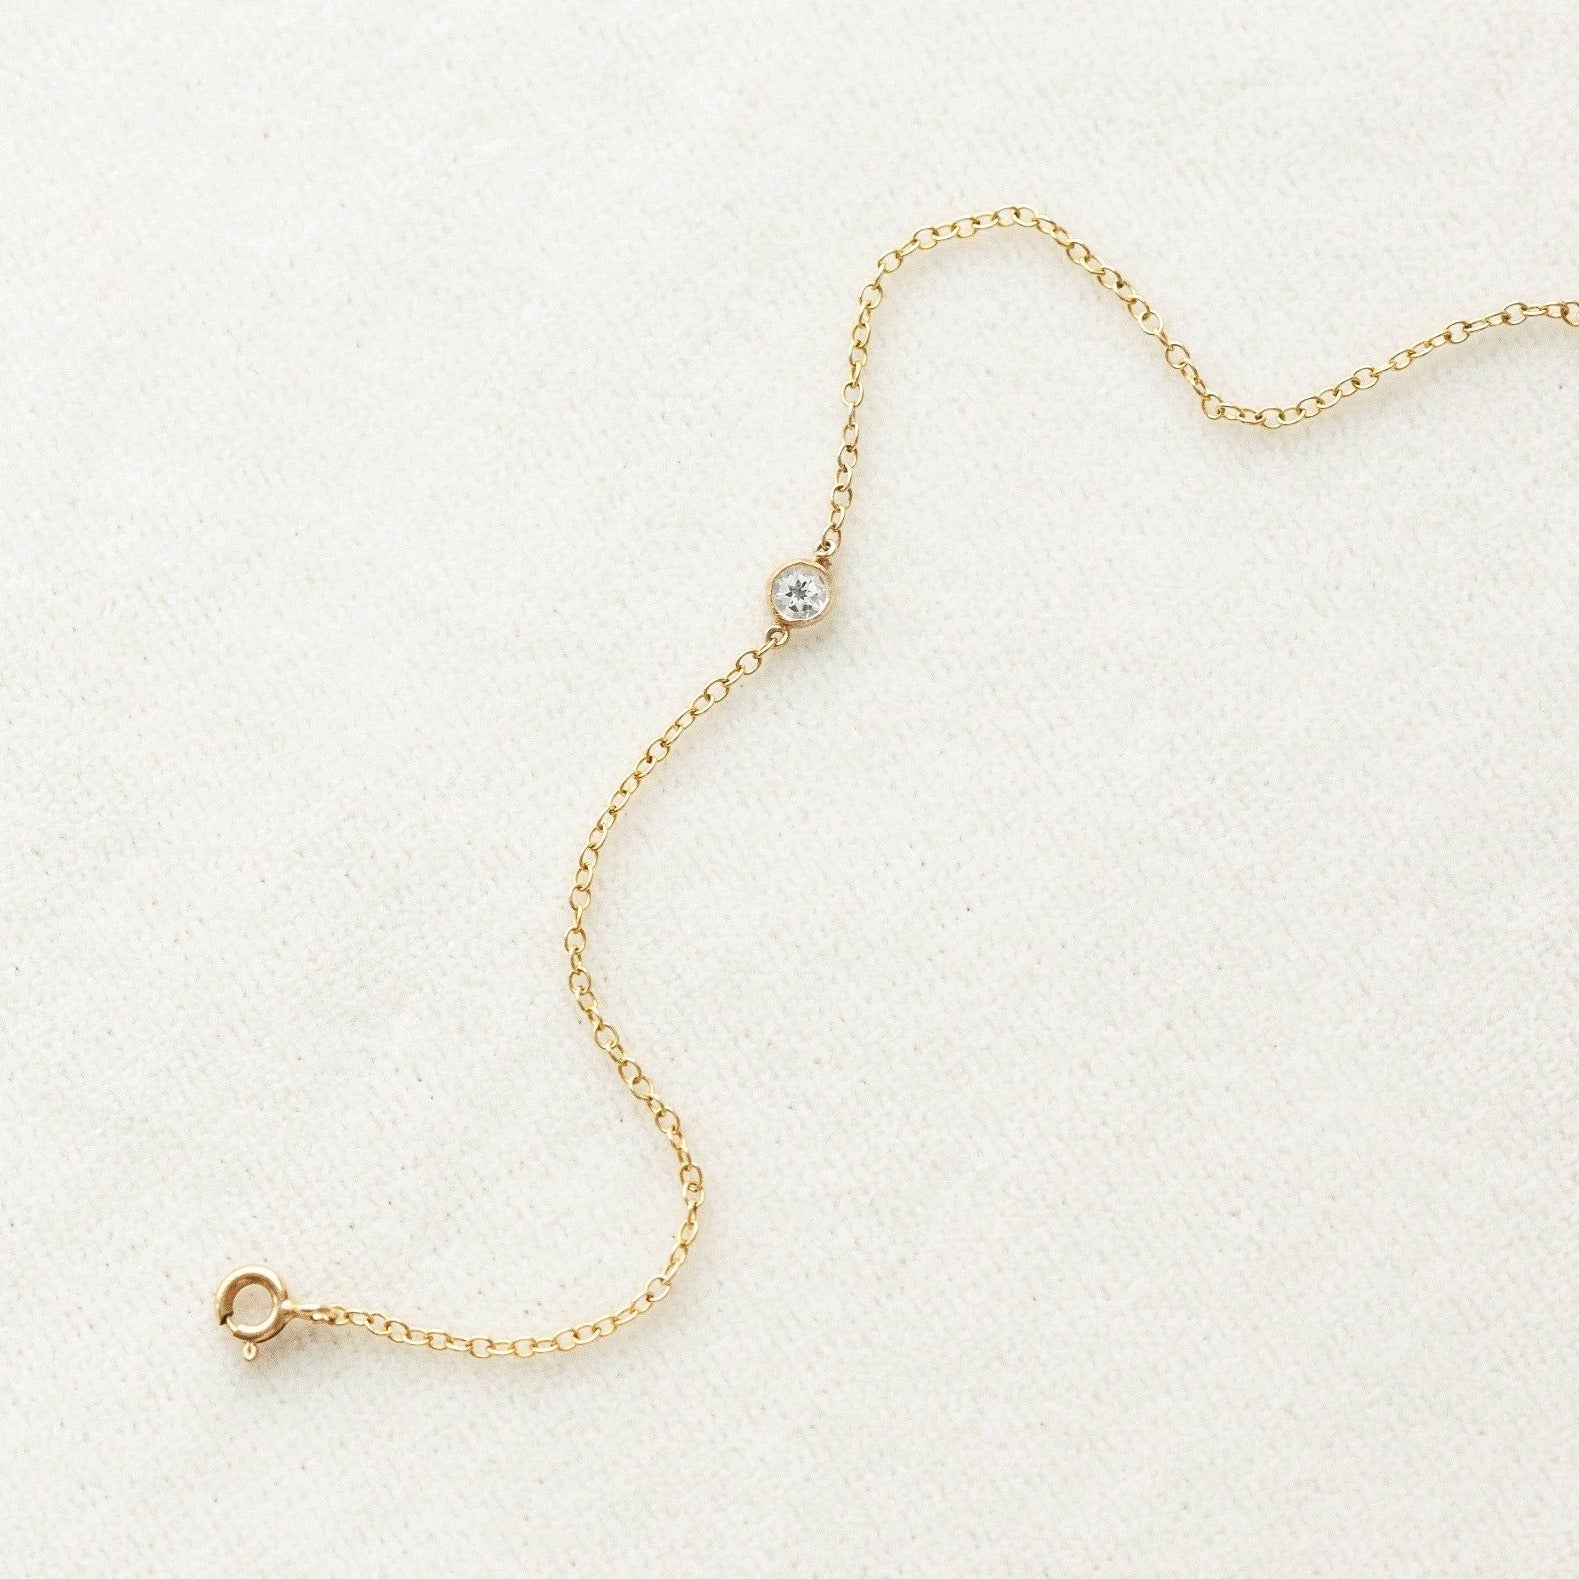 thin delicate gold bracelet with white topaz gemstone